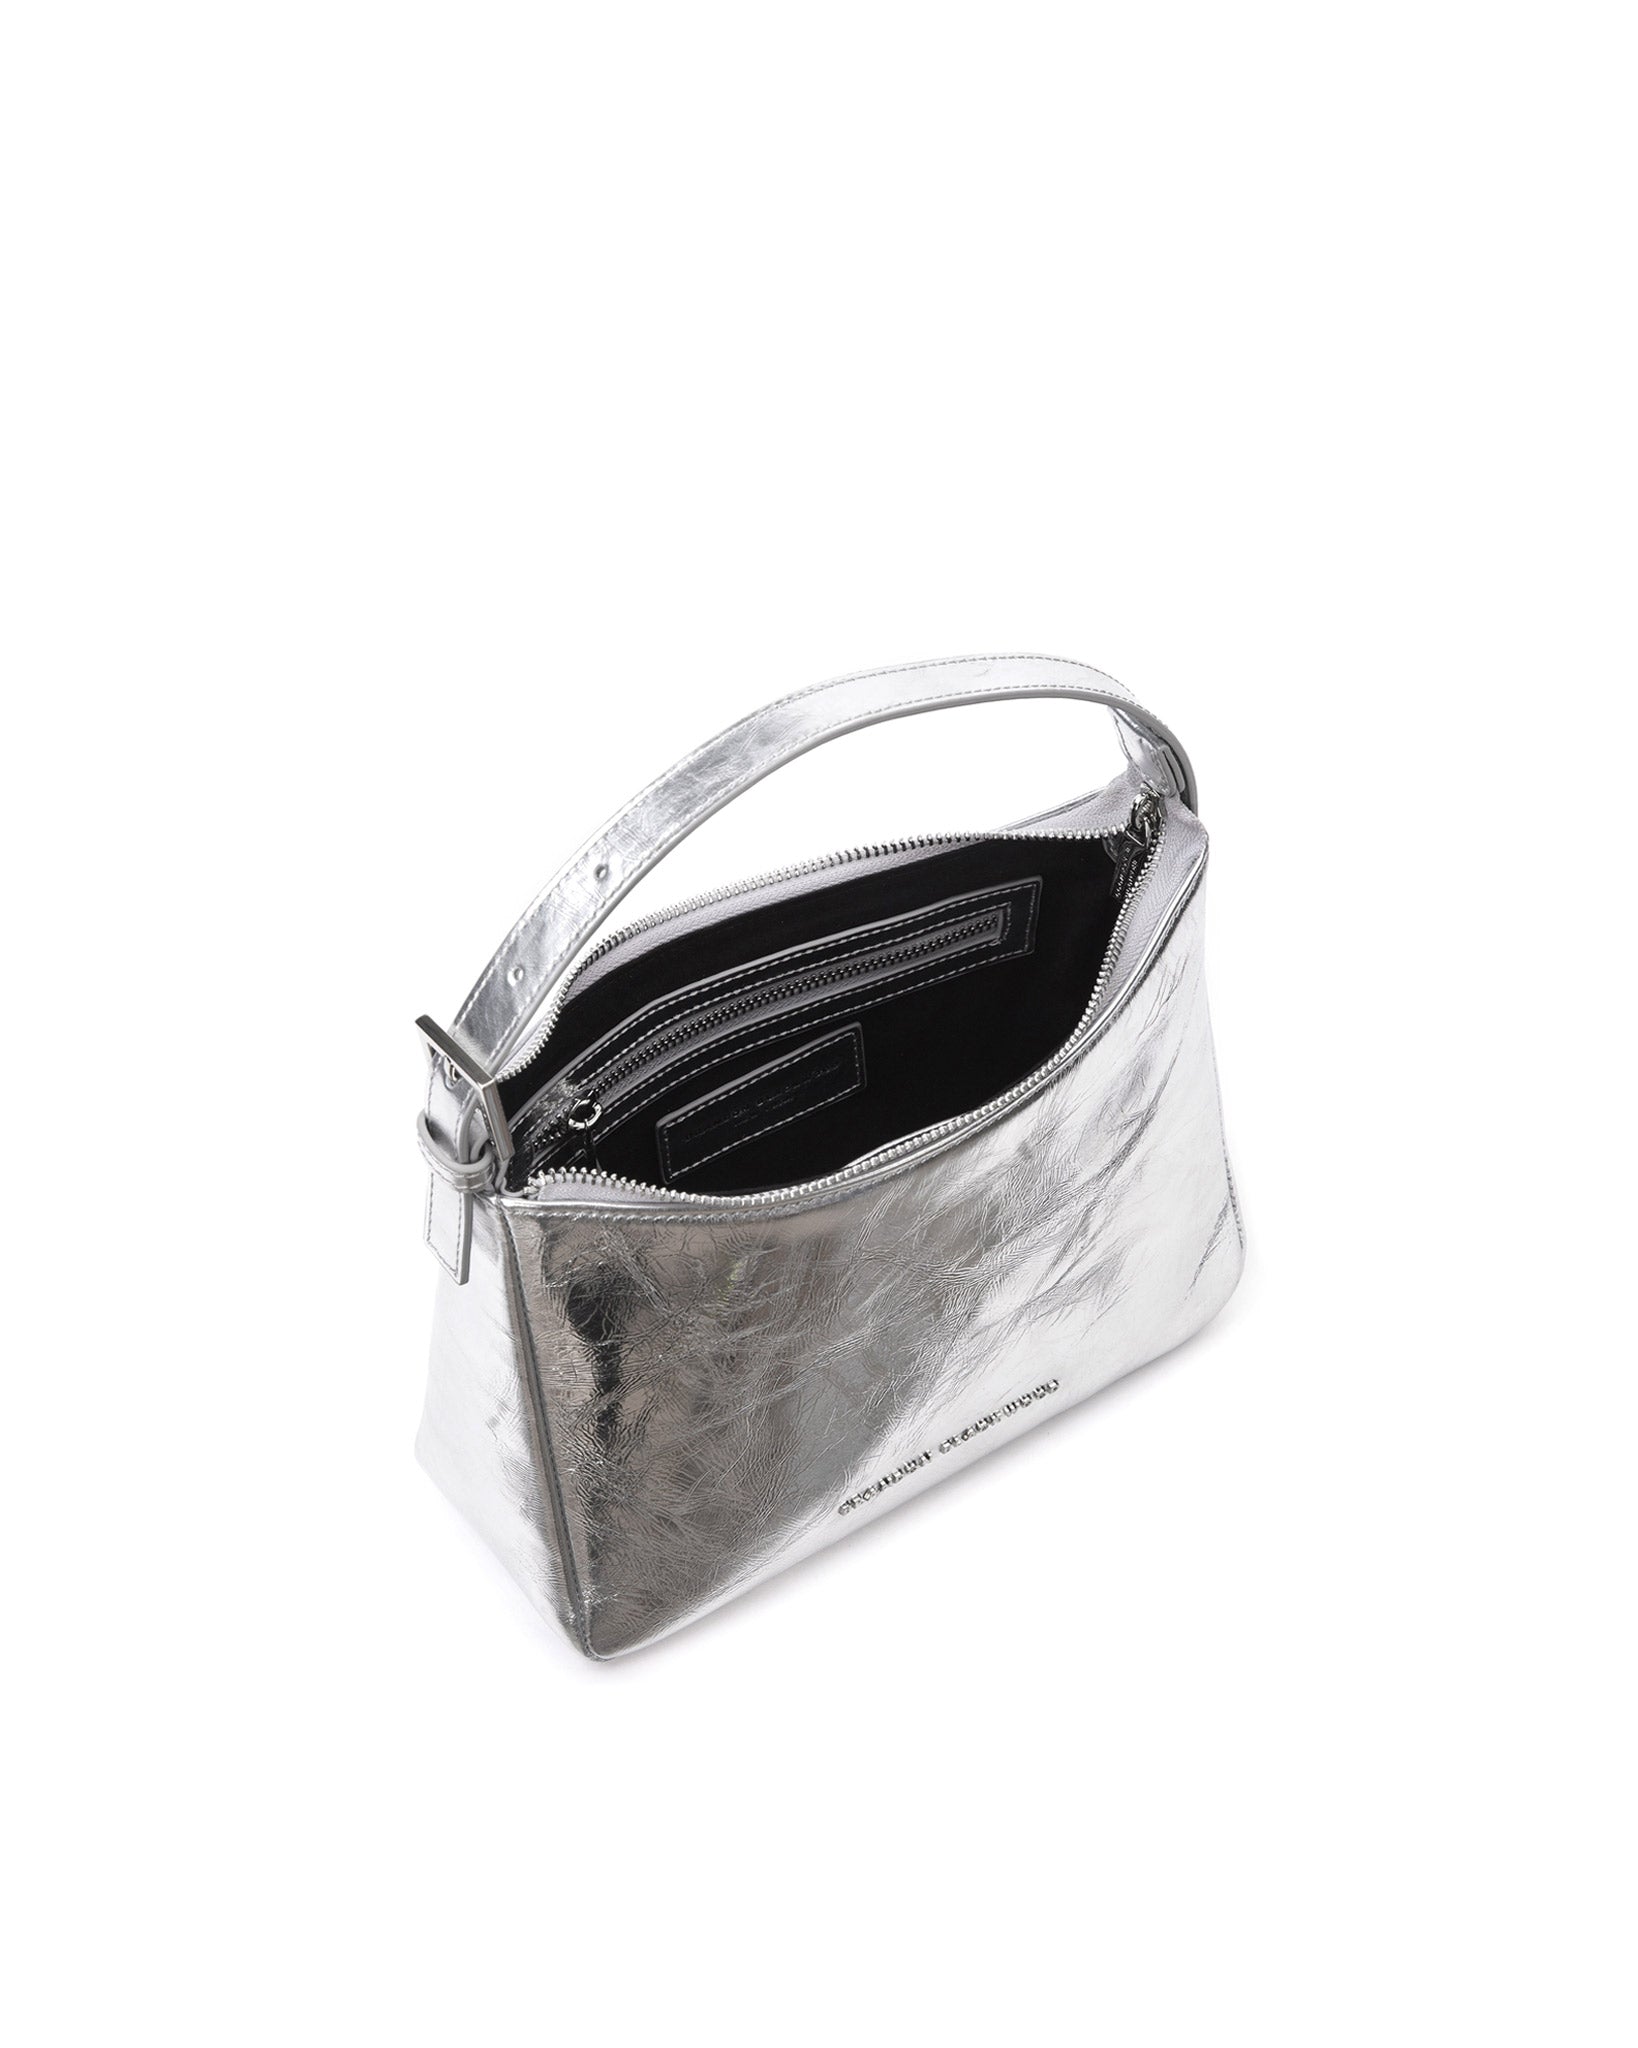 Brandon Blackwood New York - Cortni Bag - Cracked Metallic Silver Leather